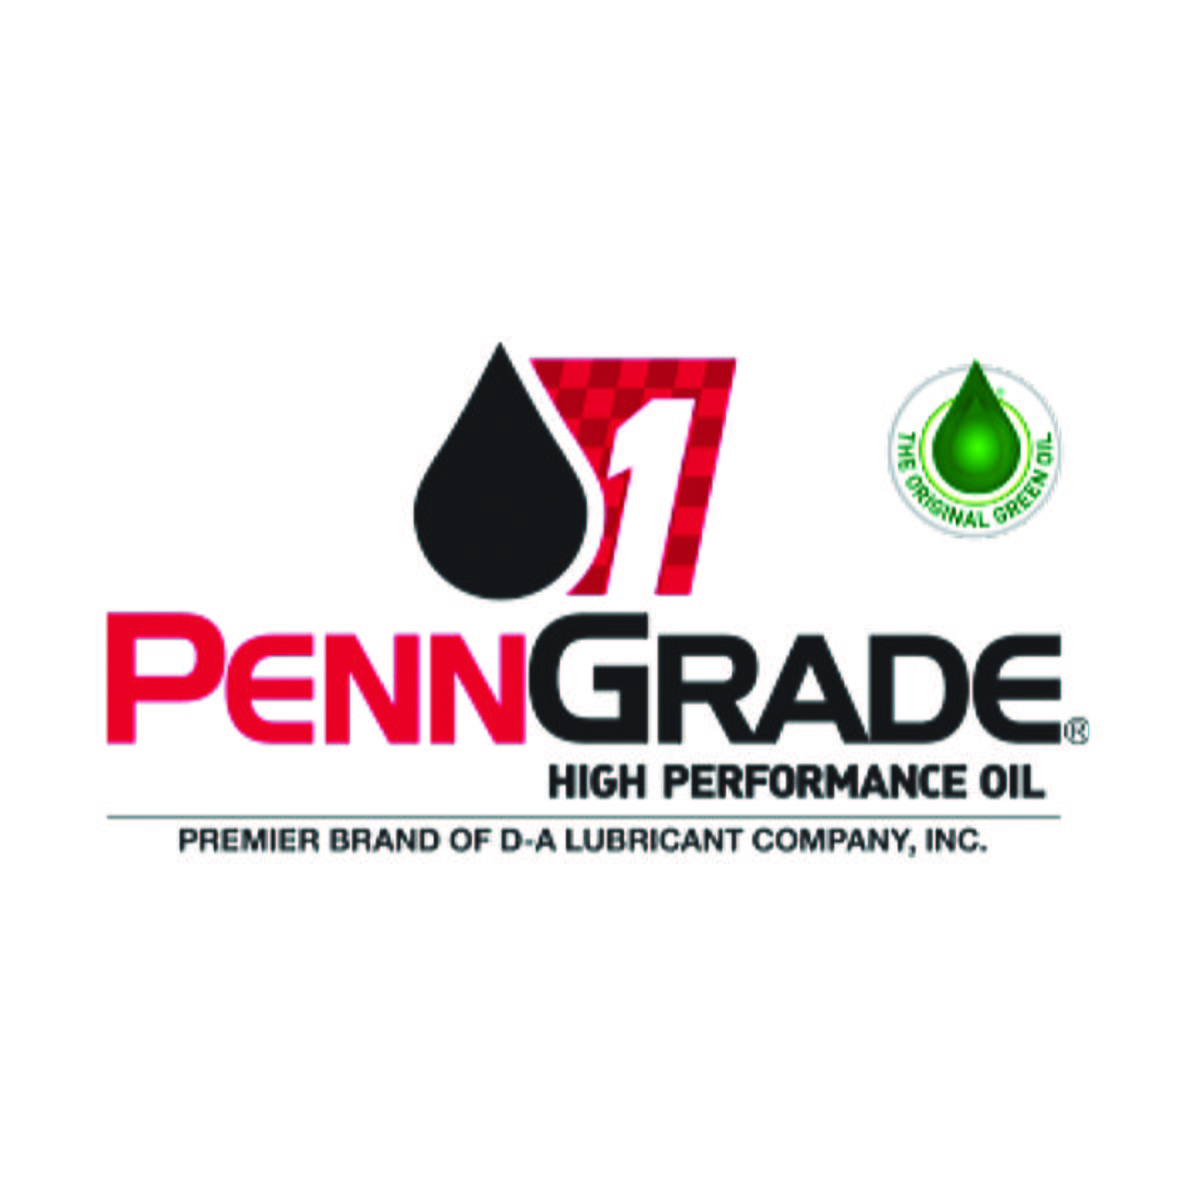 PennGrade Oil